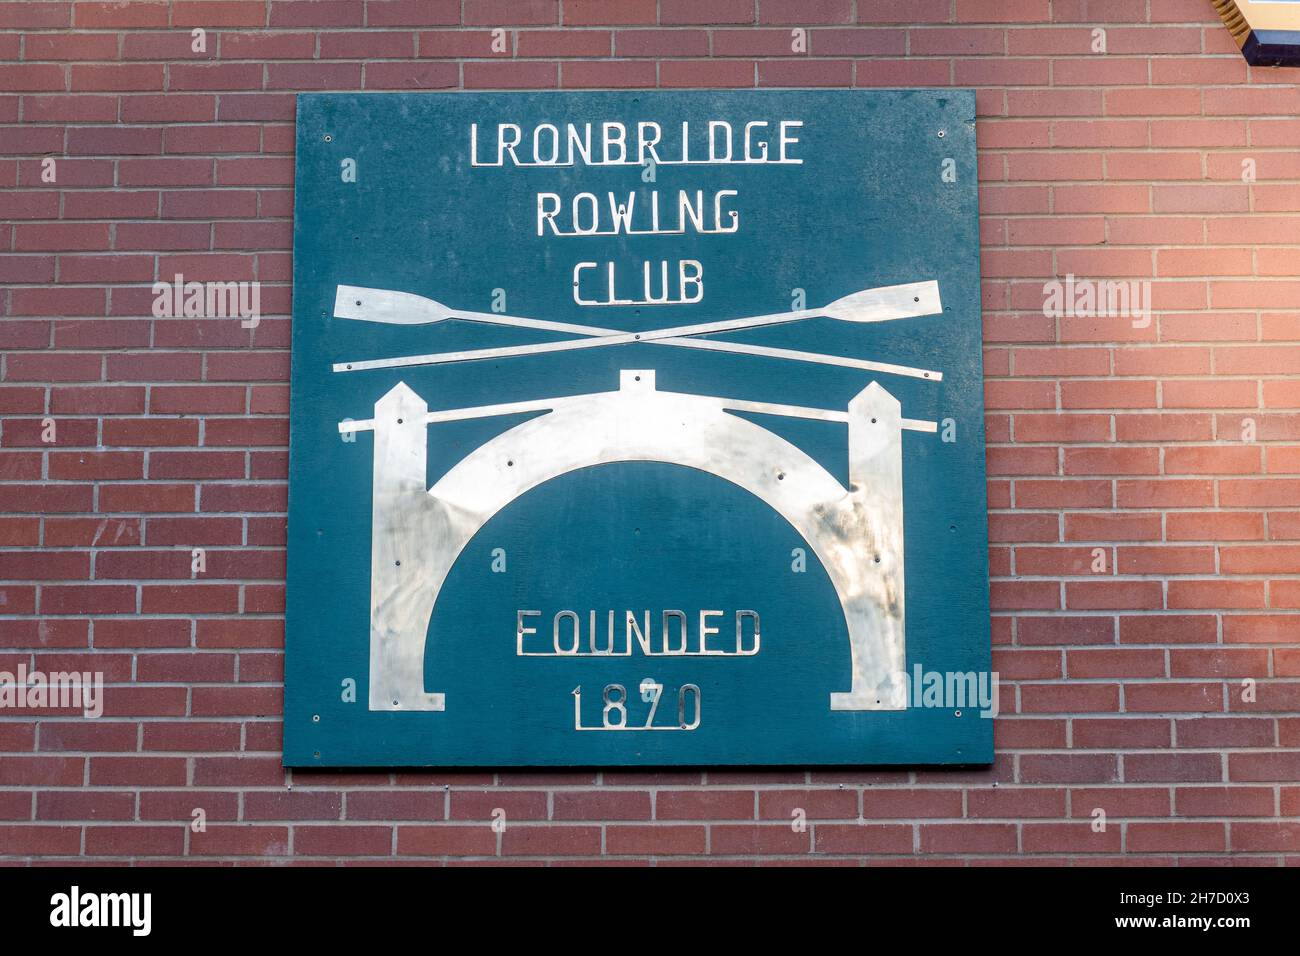 Ironbridge Rowing Club sign on exterior of the club building, Shropshire, England, UK Stock Photo